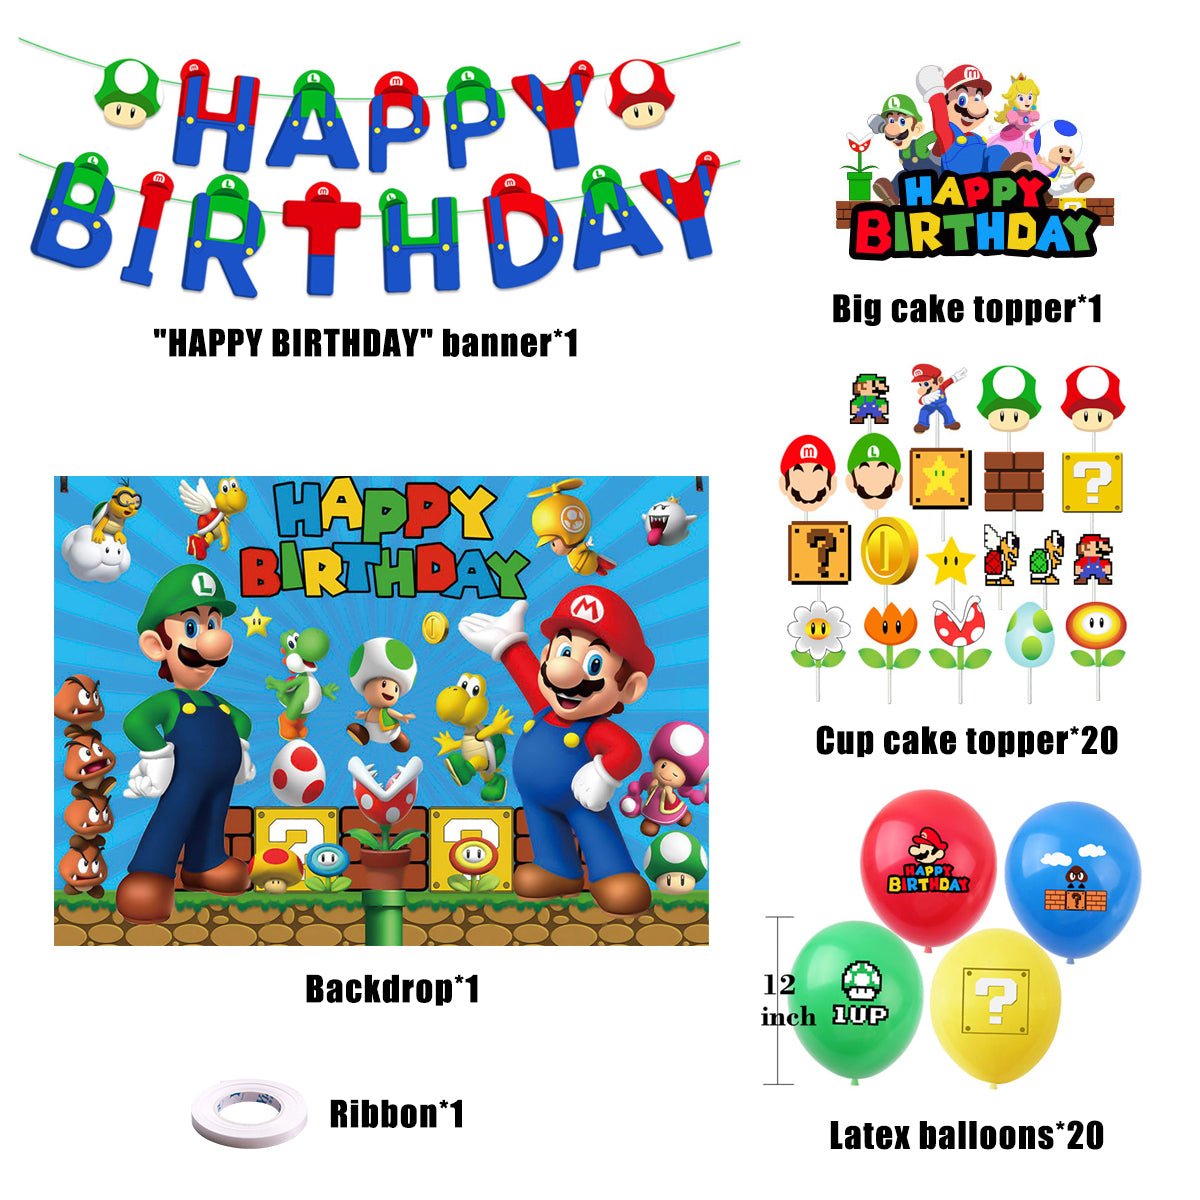 Super Mario Birthday Party Decorations - Party Corner - BM Trading